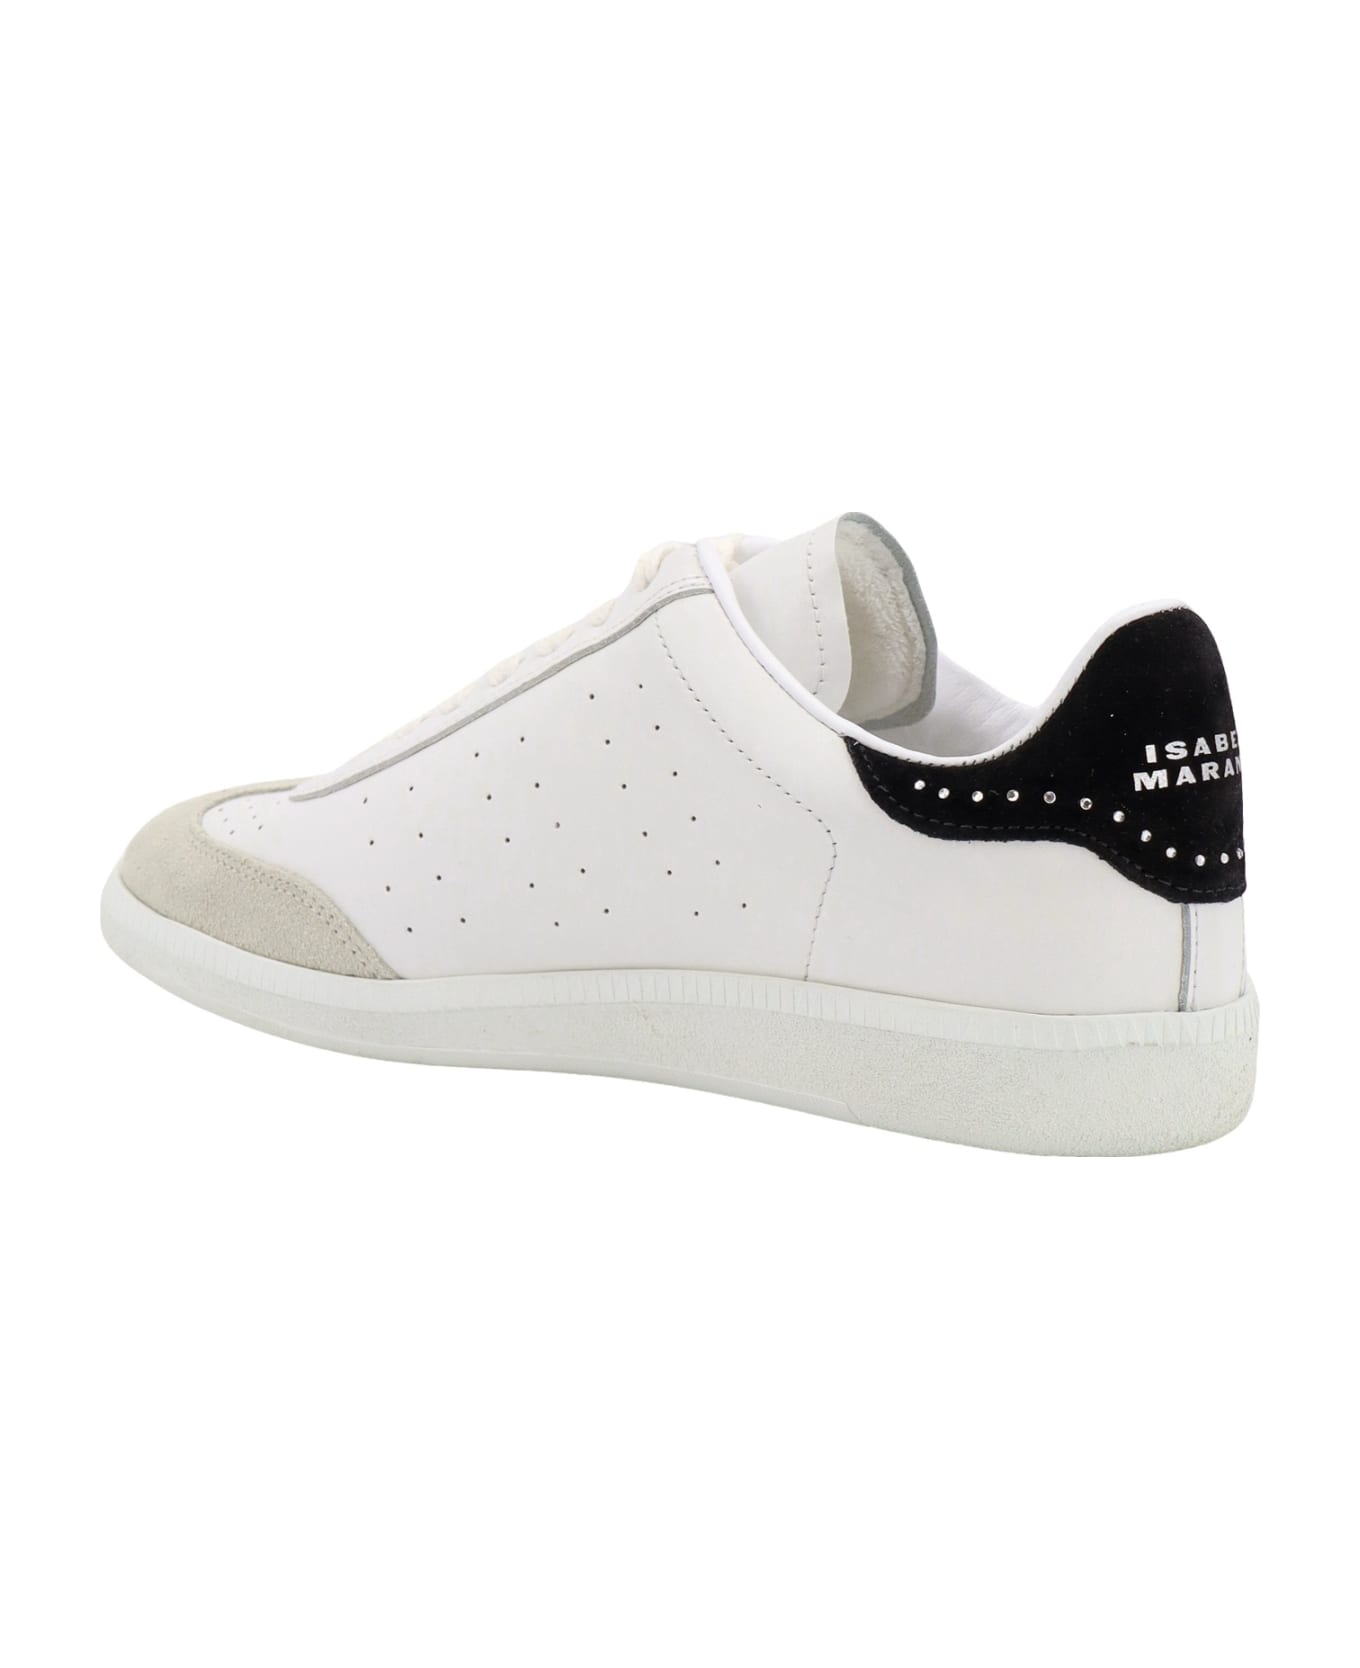 Isabel Marant Sneakers - Whb White Black